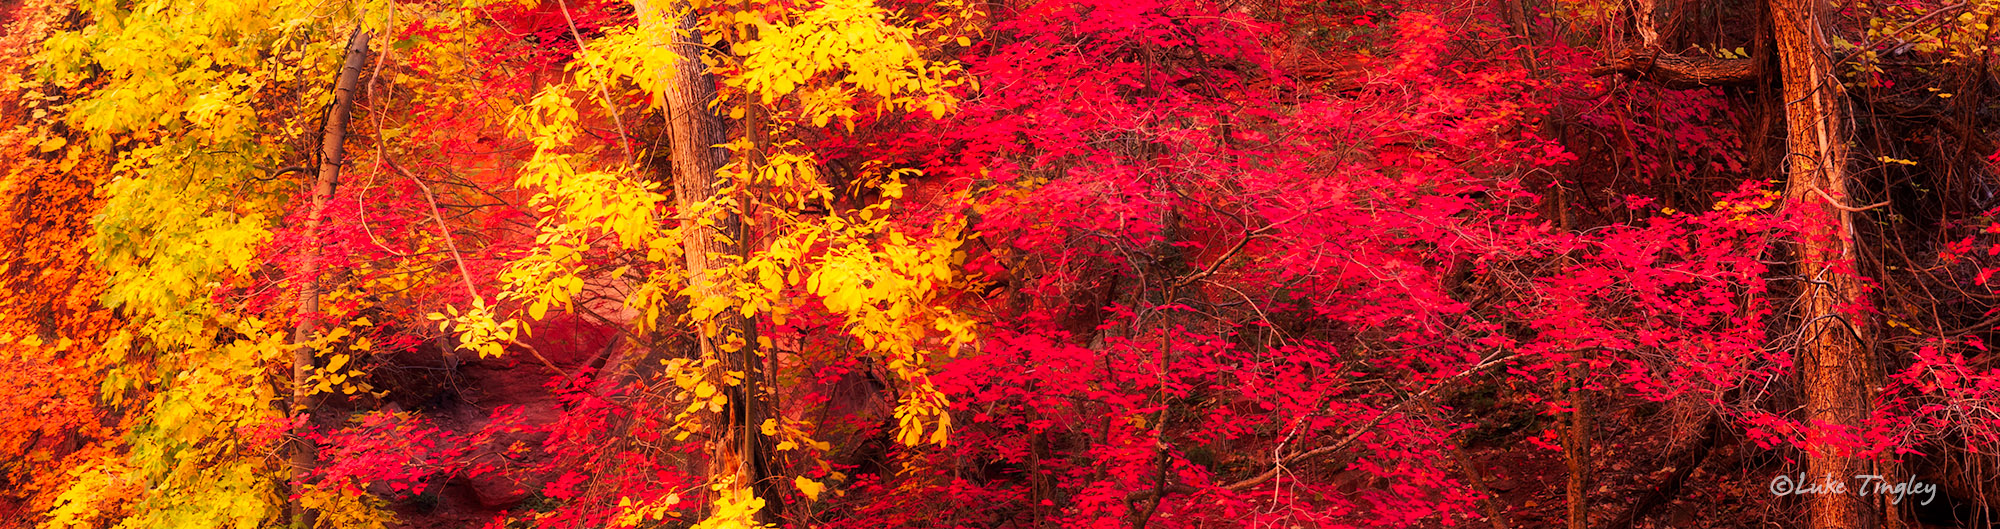 Fall colors in full bloom near the Virgin River in Zion National Park, Utah.